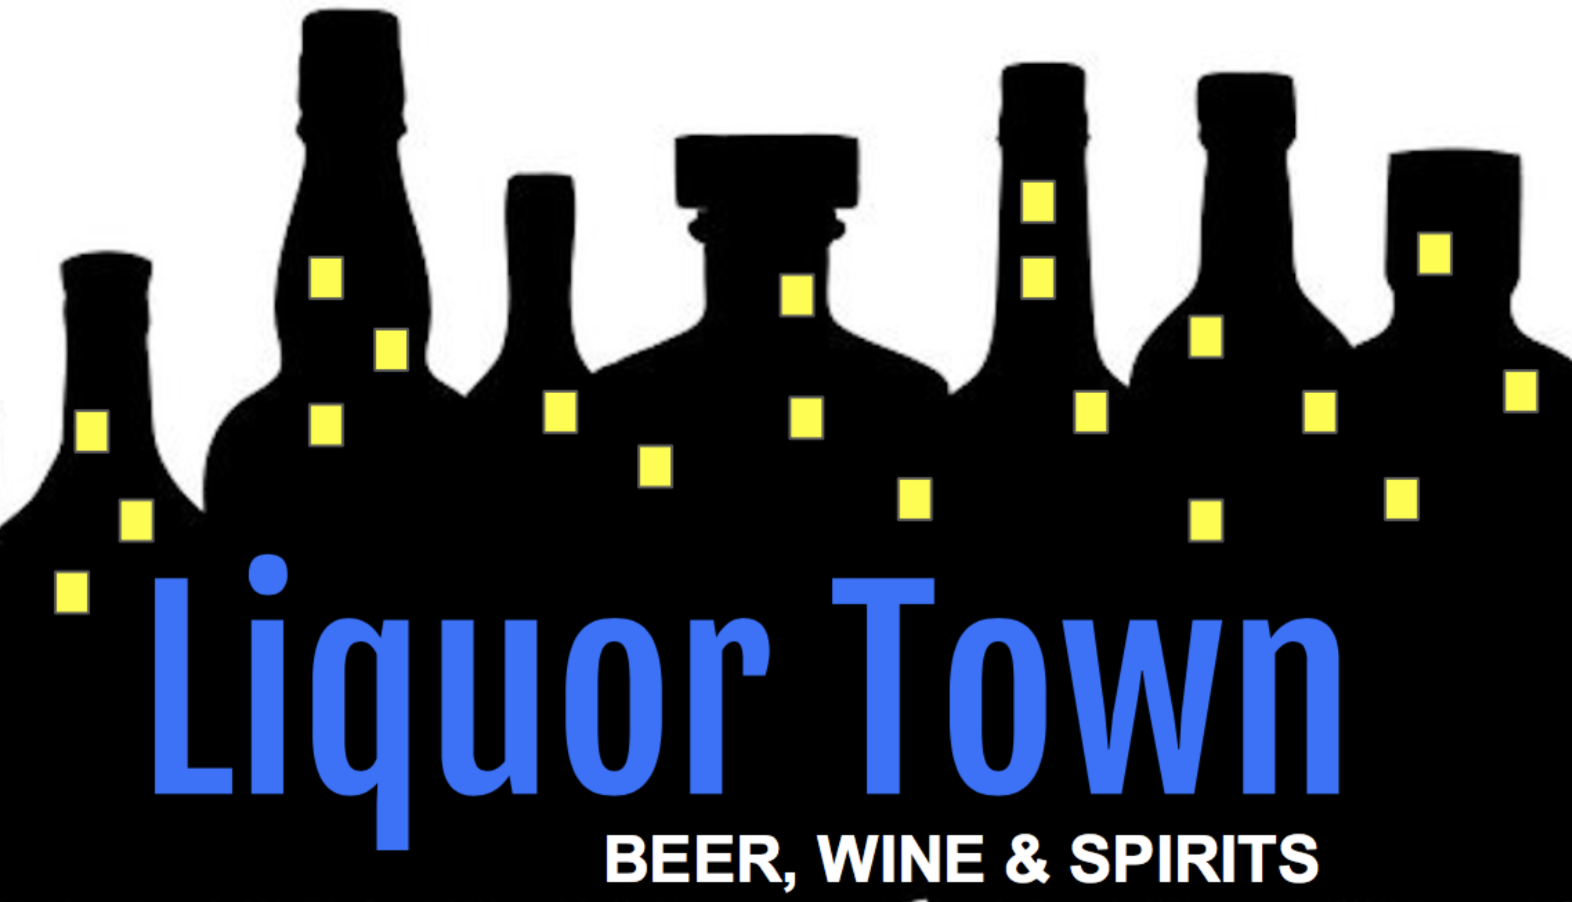 About Liquor Town